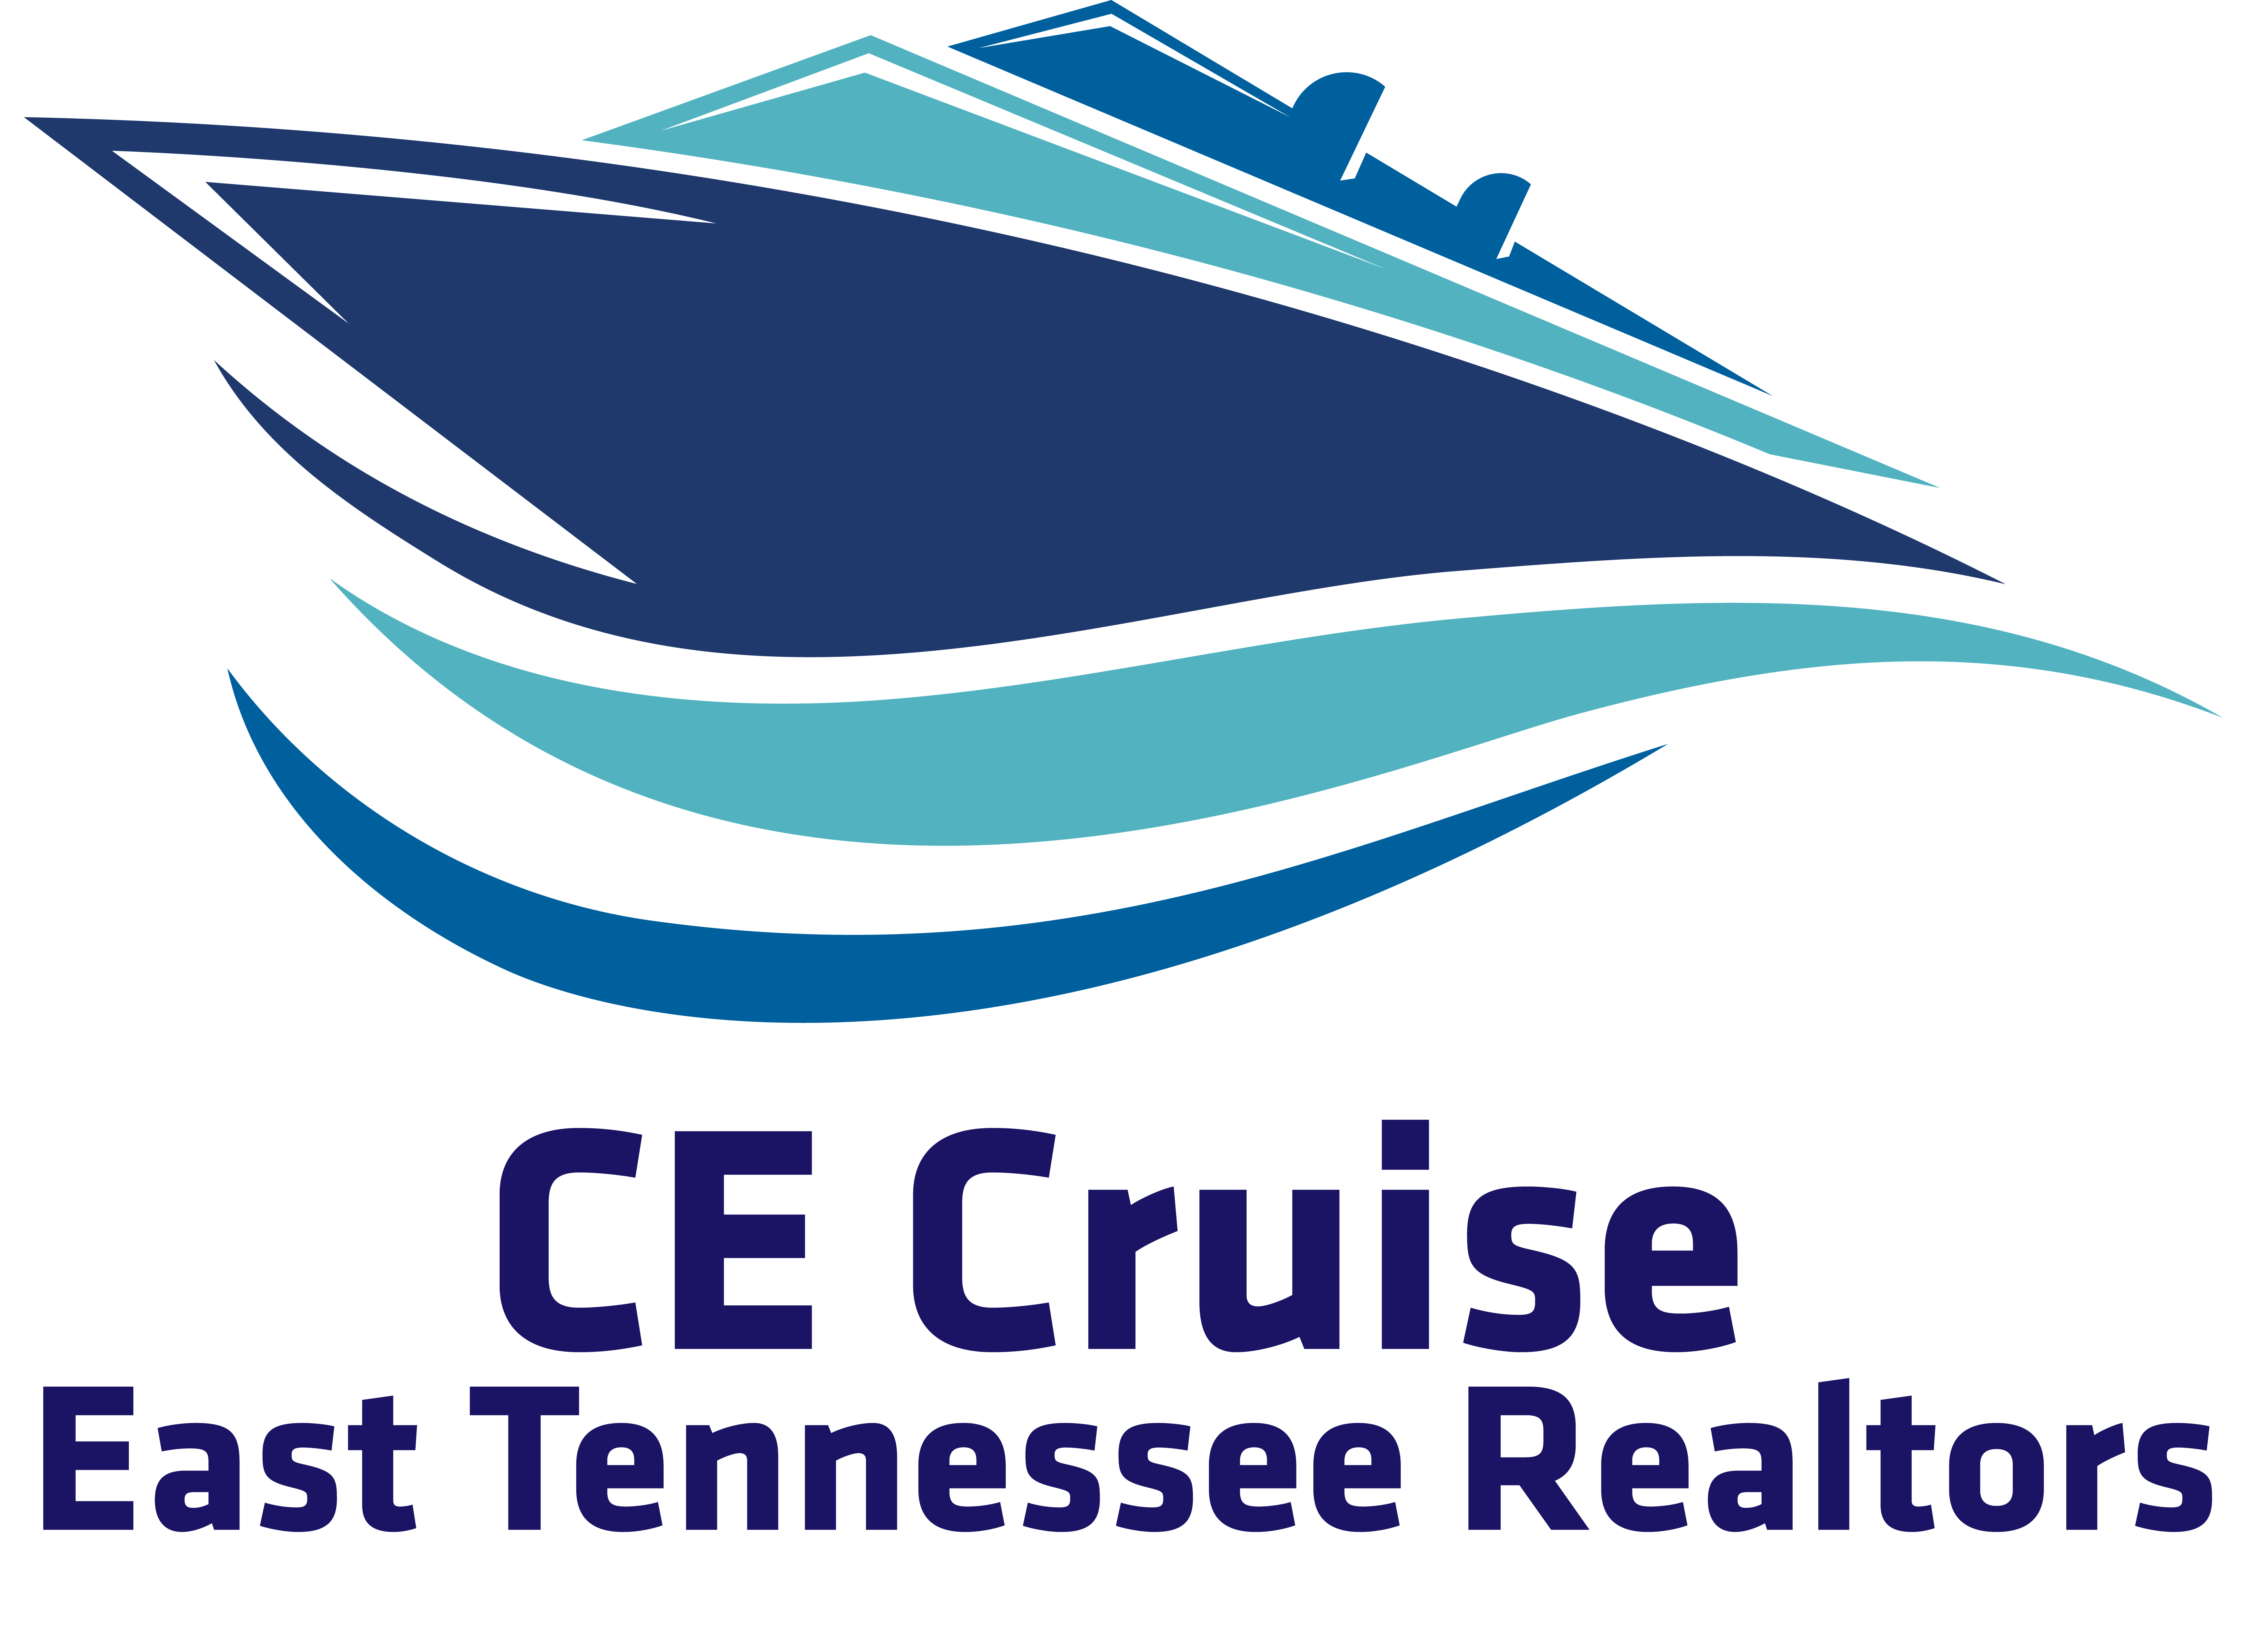 East Tennessee Realtors CE Cruise logo